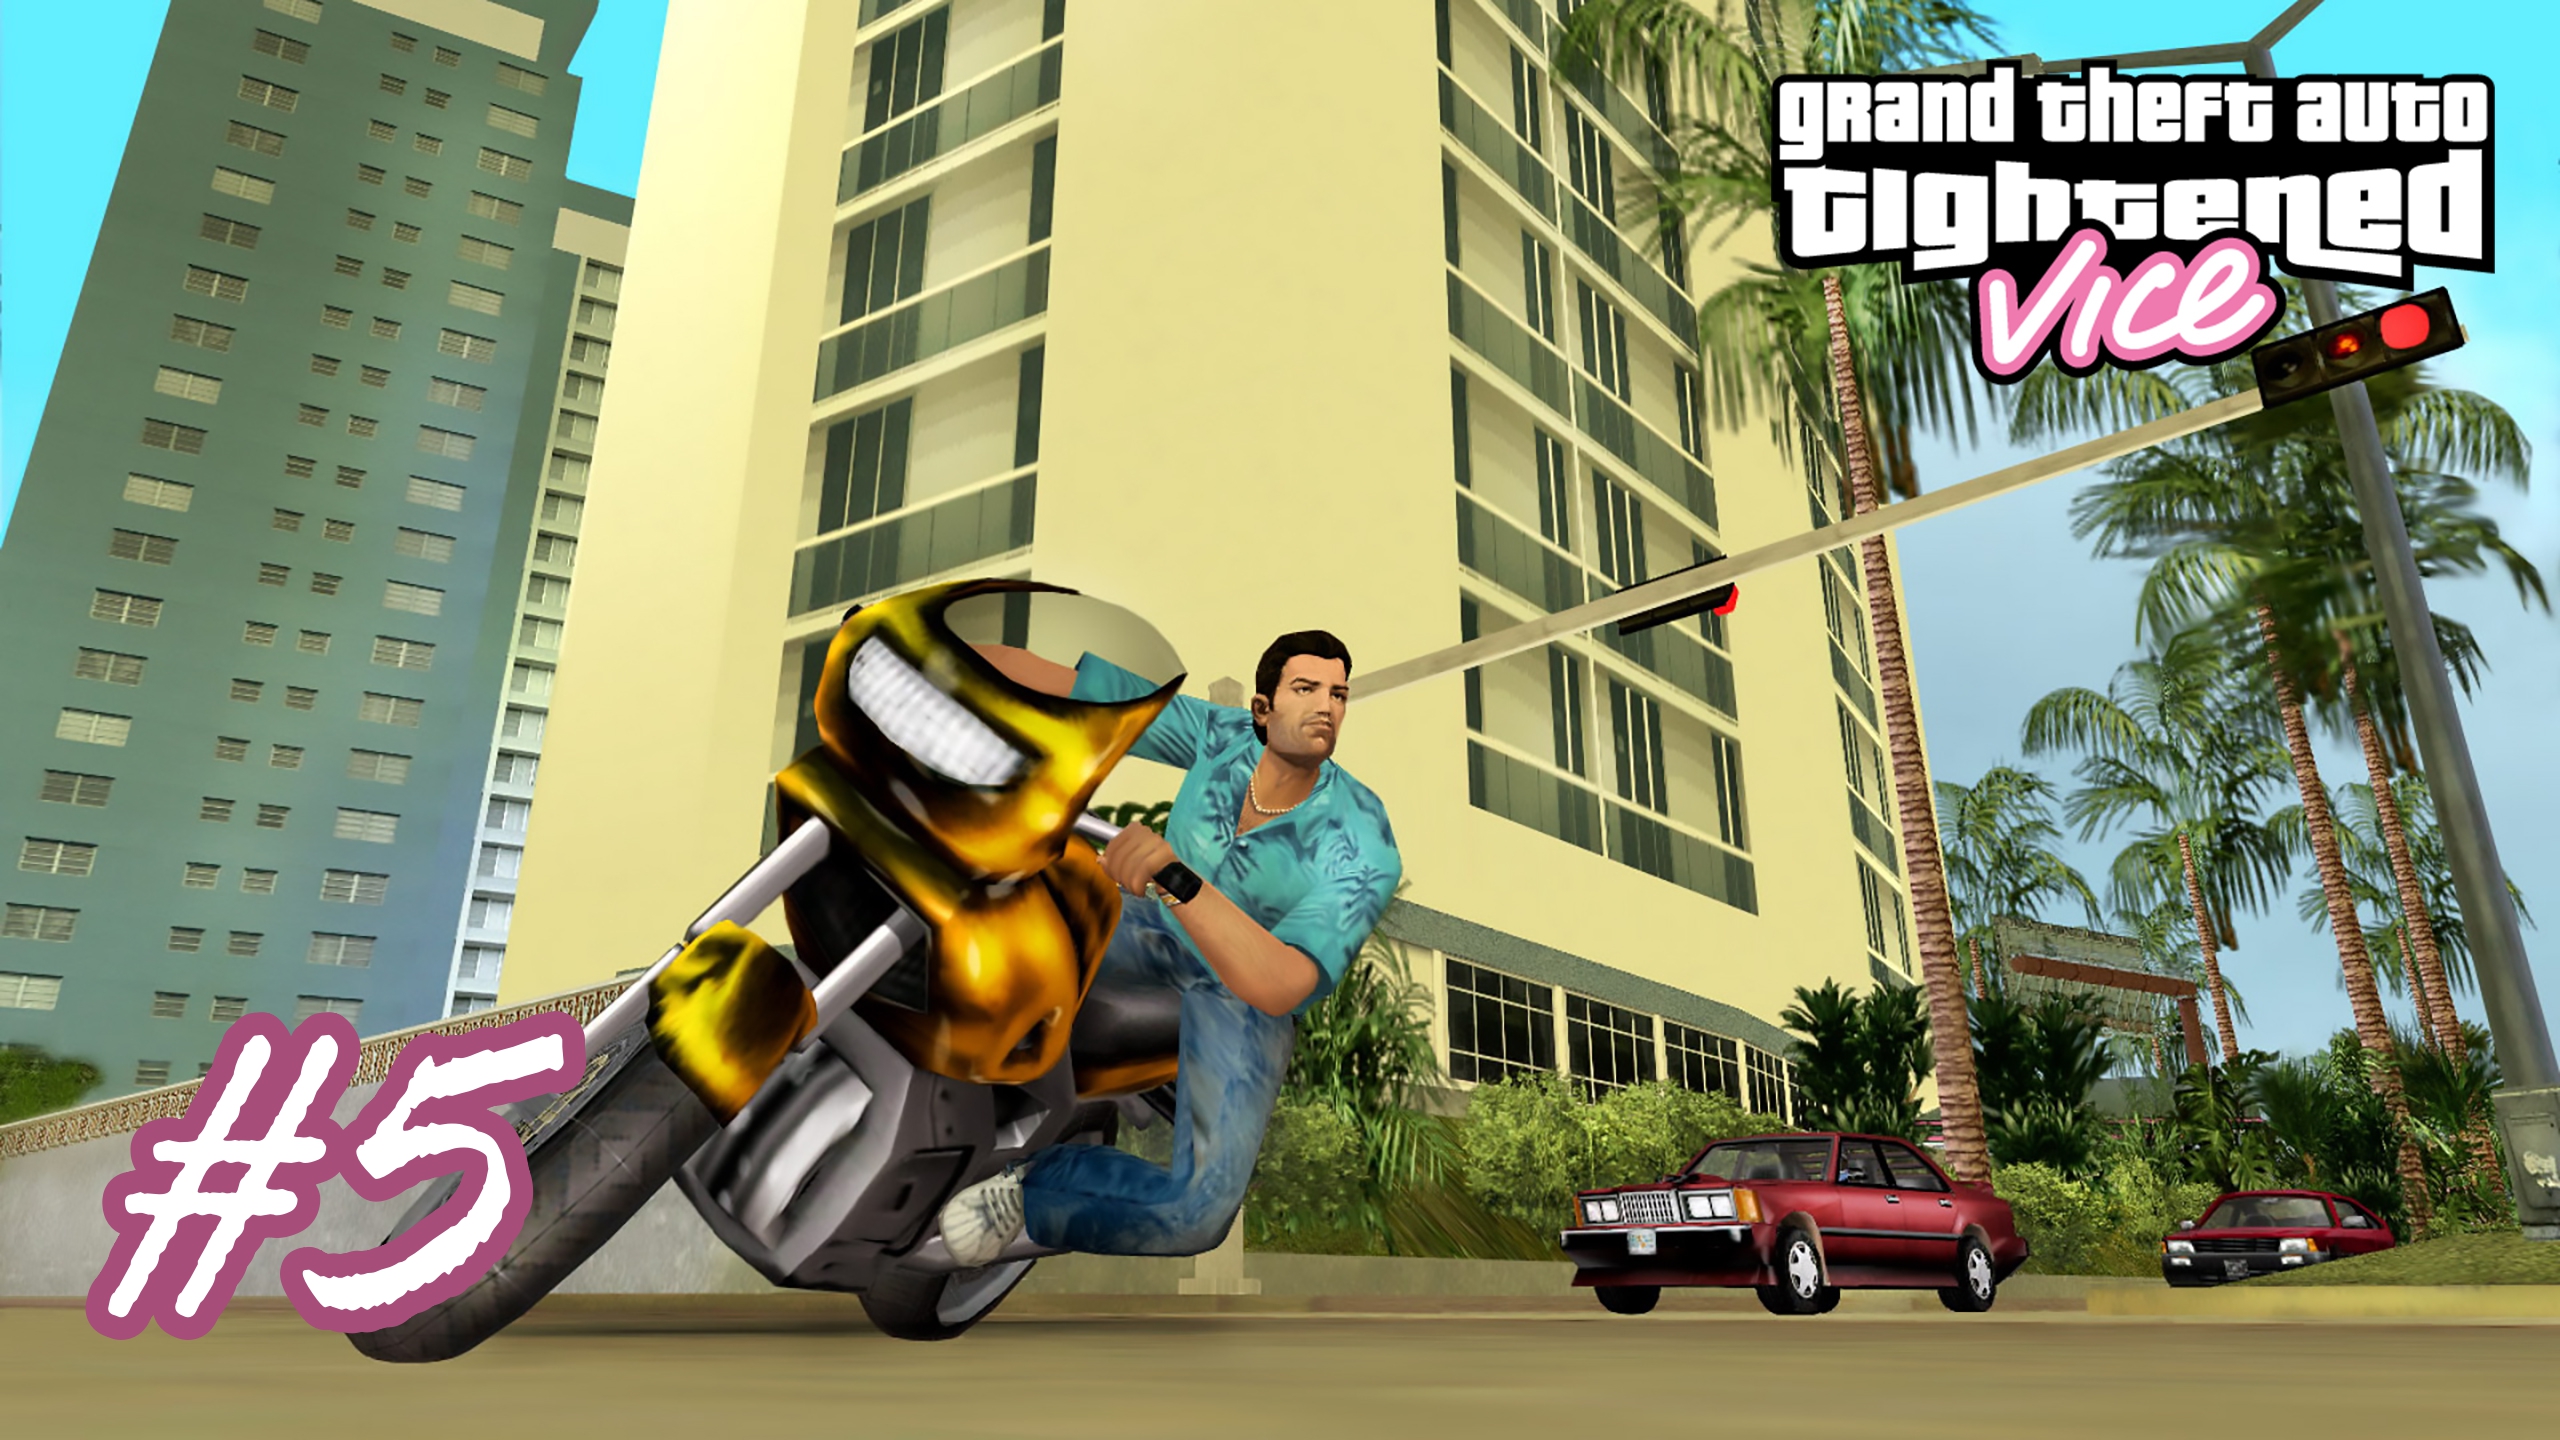 Grand Theft Auto VС: Tightened Vice - Ассасин Порочного Города #5 (100%)